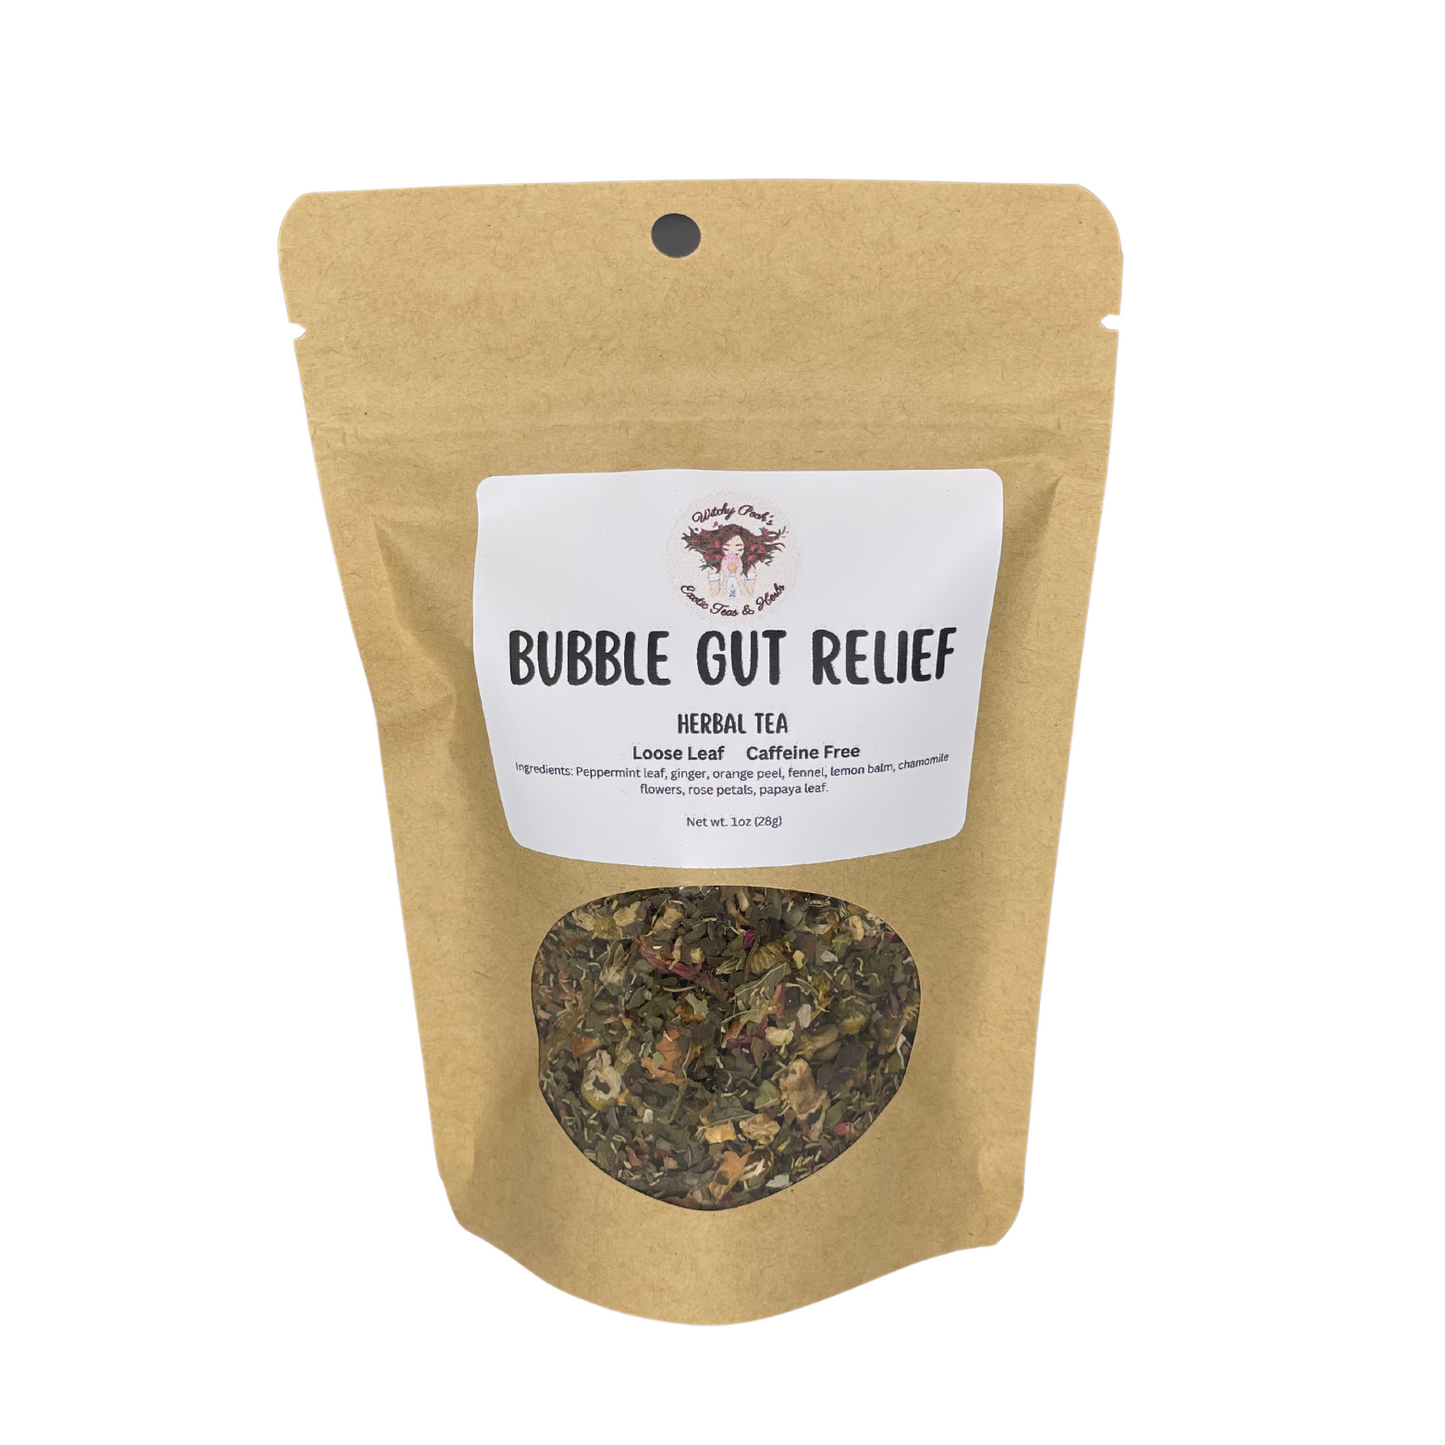 Bubble Gut Relief Tea, Herbal Tea, Loose Leaf Tea, Caffeine Free Tea, Functional Tea